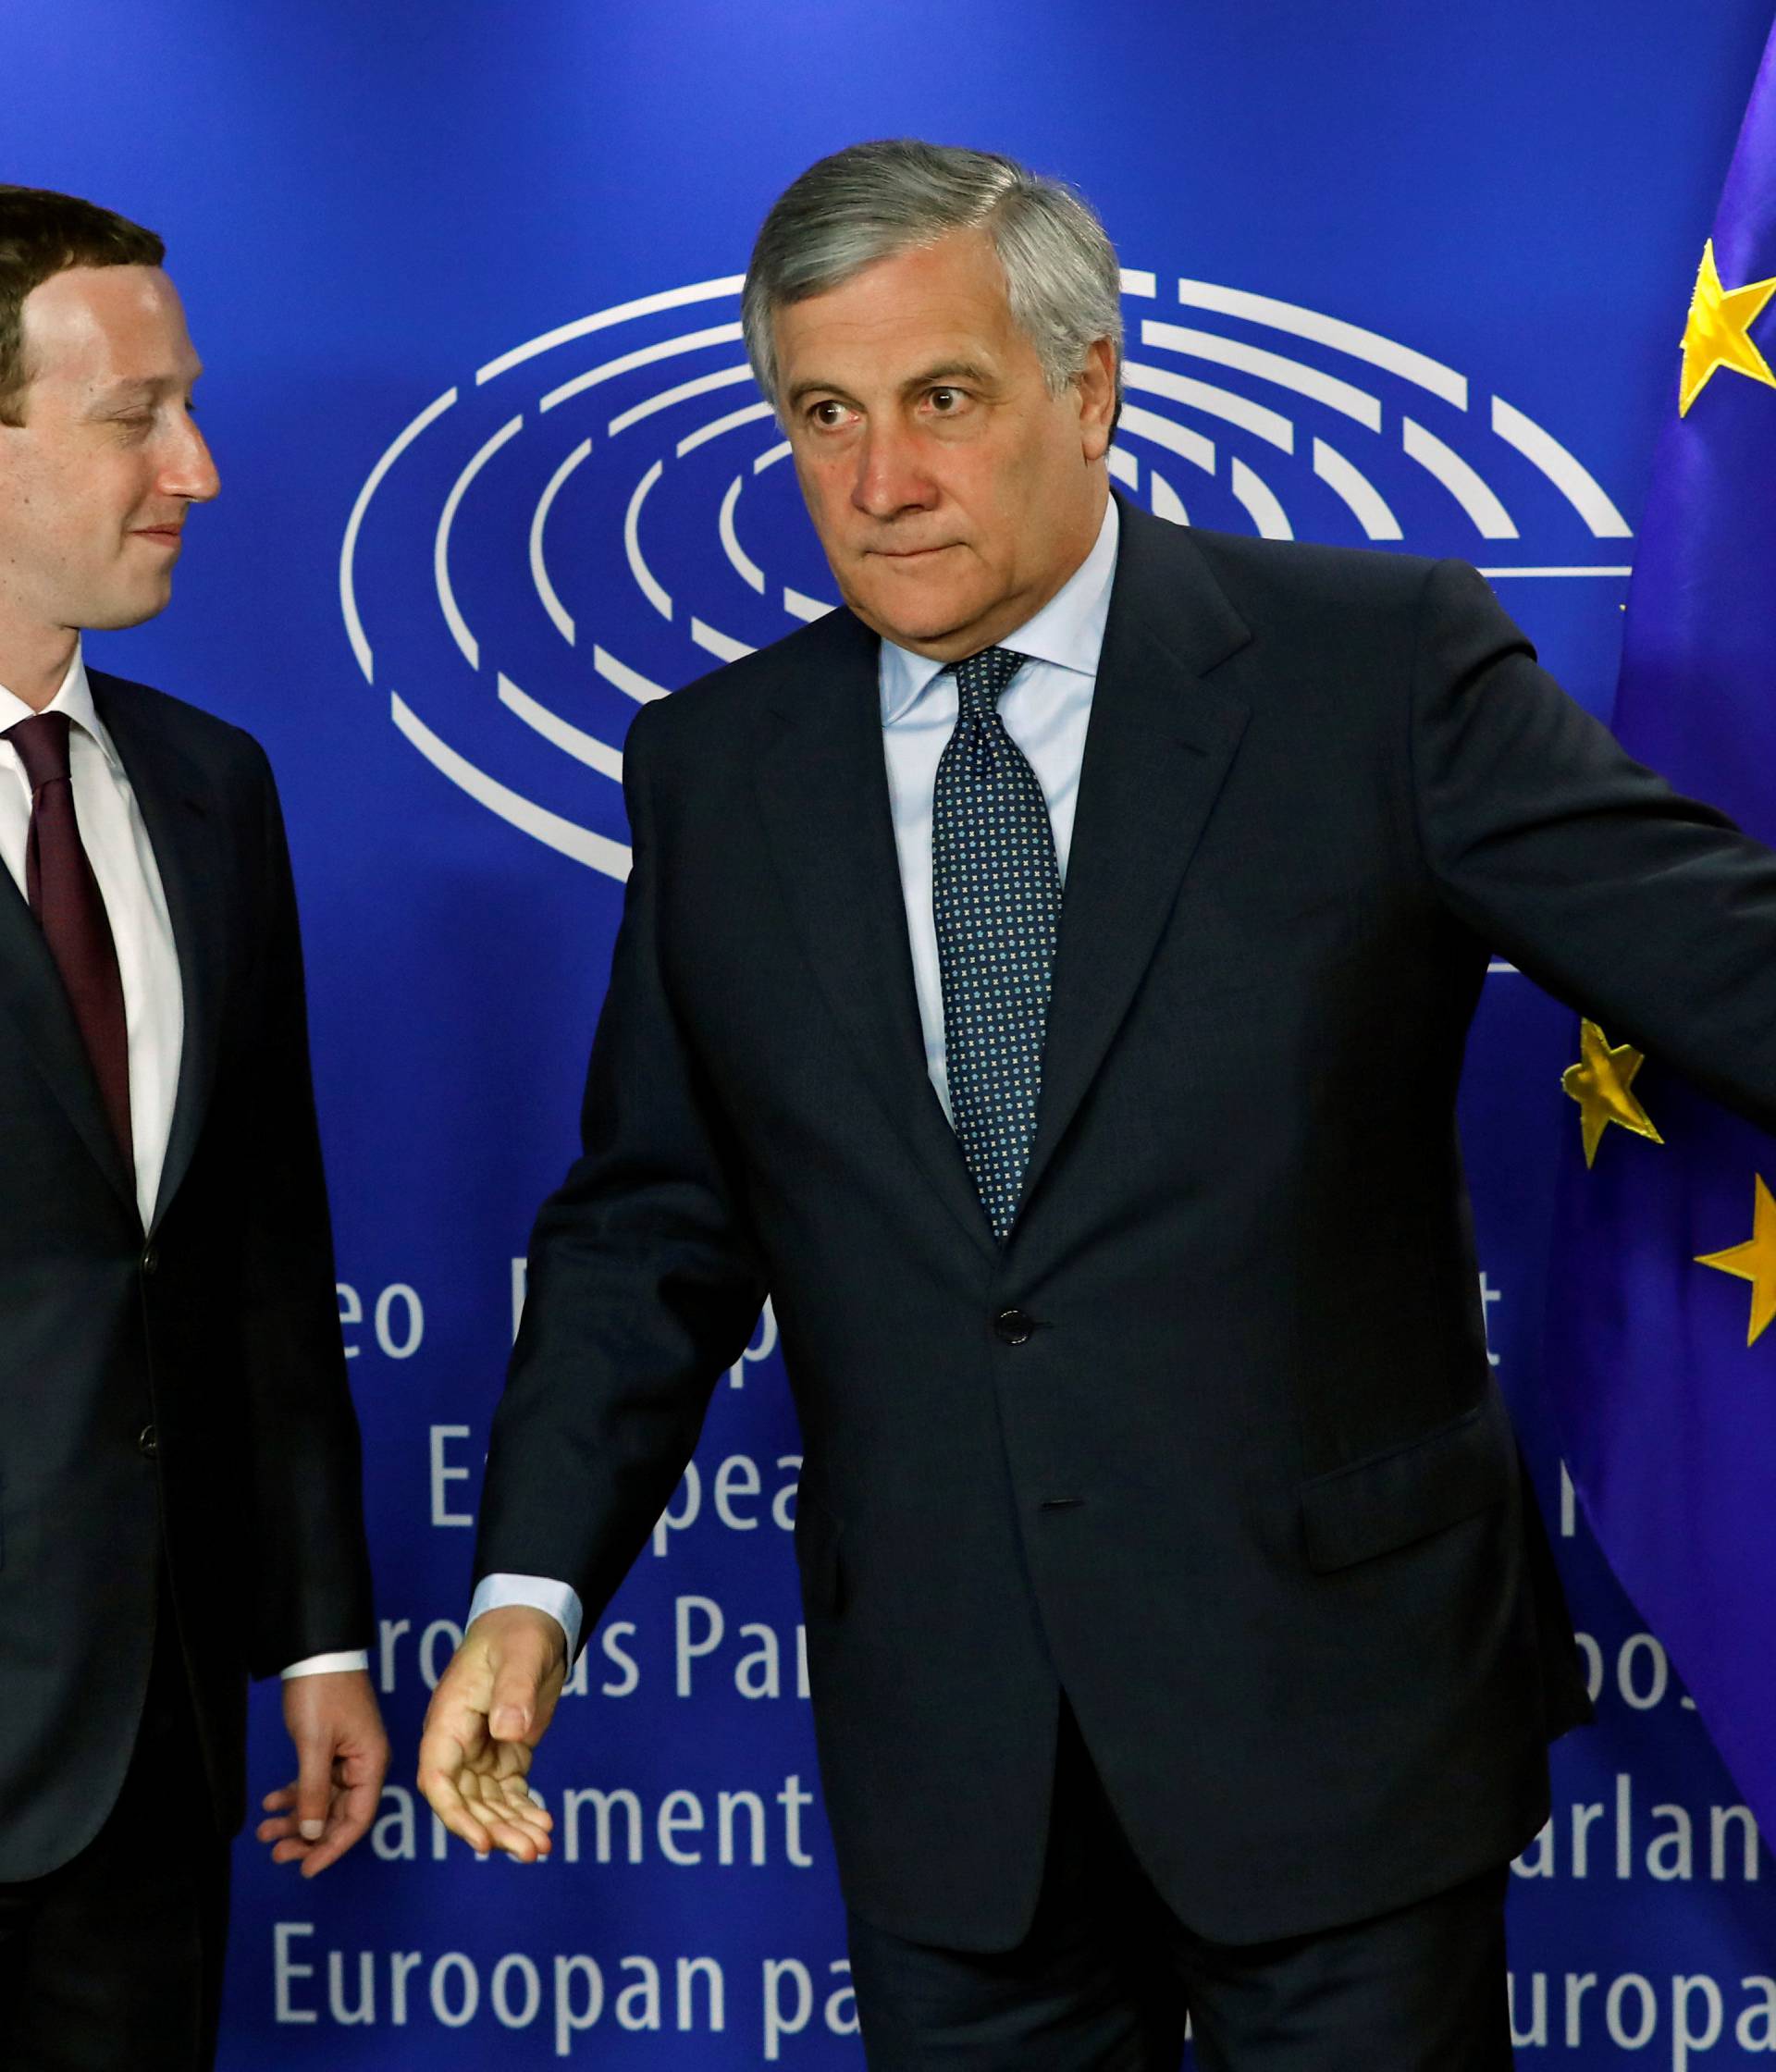 European Parliament President Antonio Tajani welcomes Facebook's CEO Mark Zuckerberg at the European Parliament in Brussels